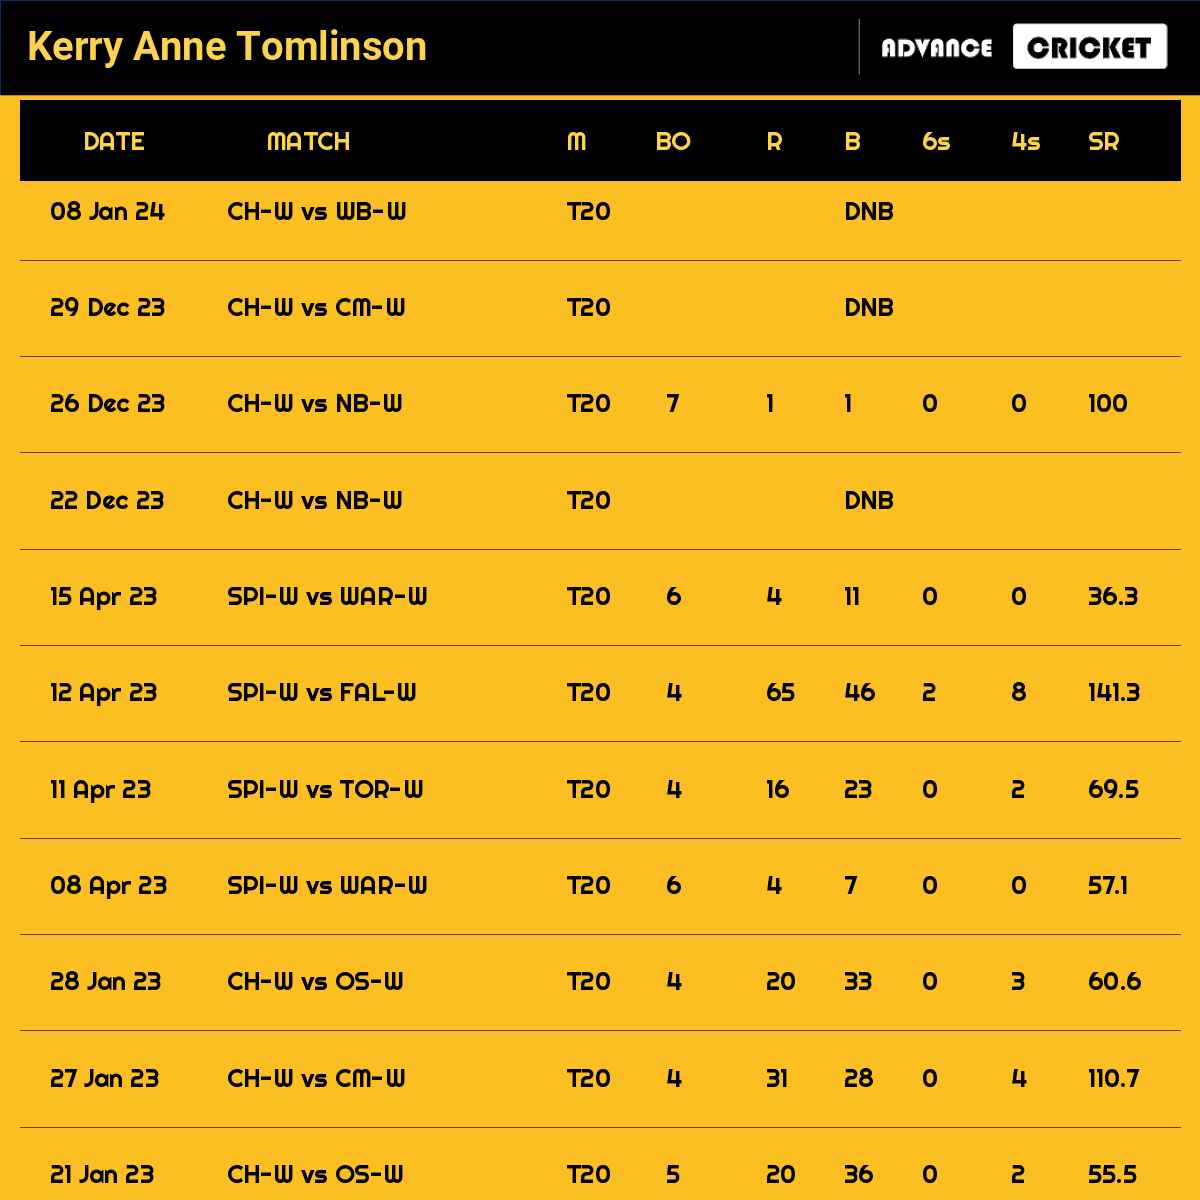 Kerry Anne Tomlinson recent matches